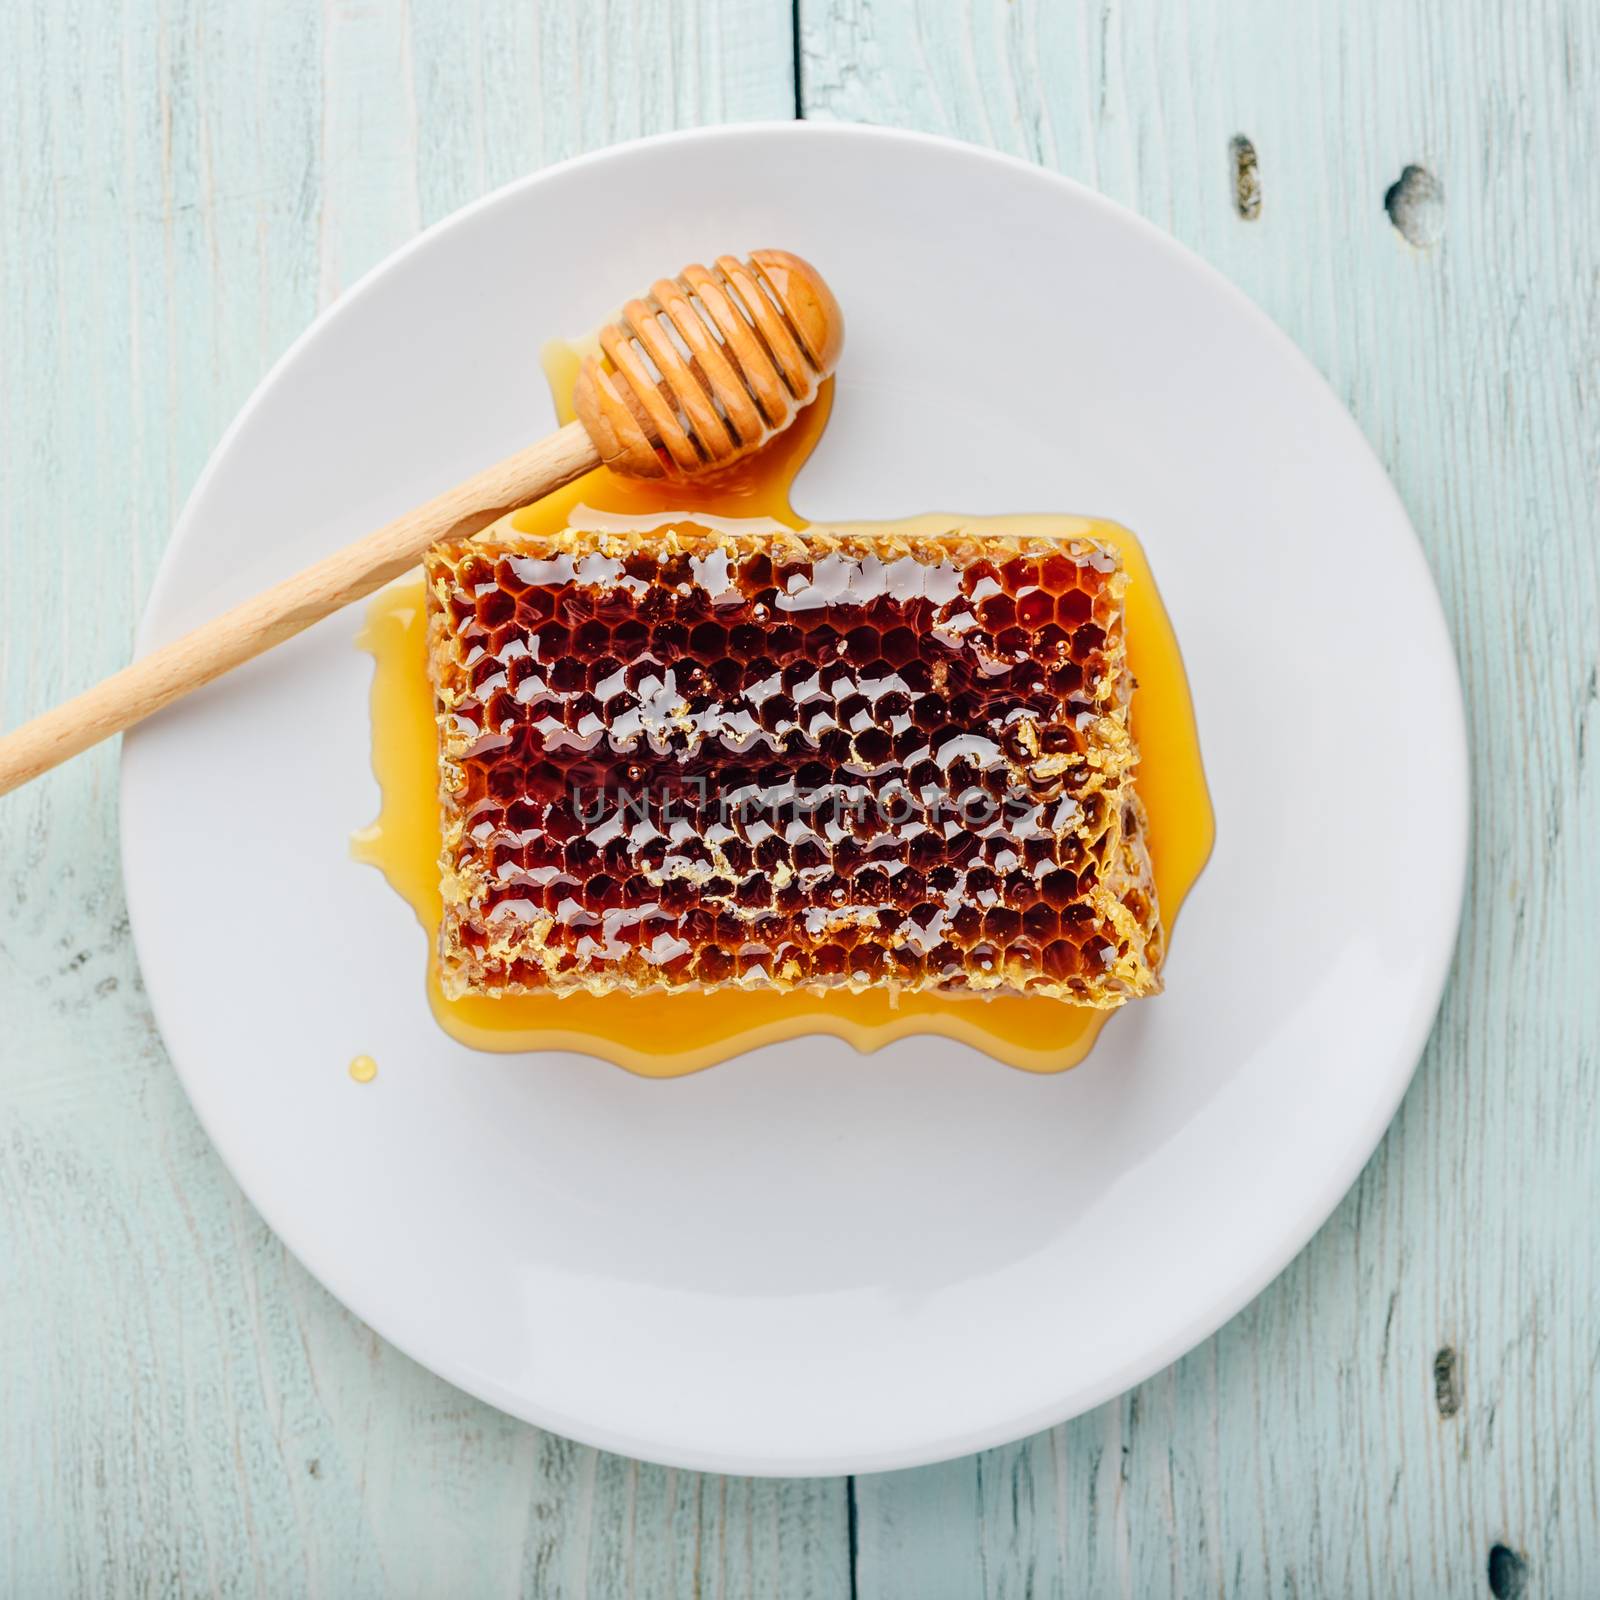 Honeycomb on white plate with honey dipper by Seva_blsv